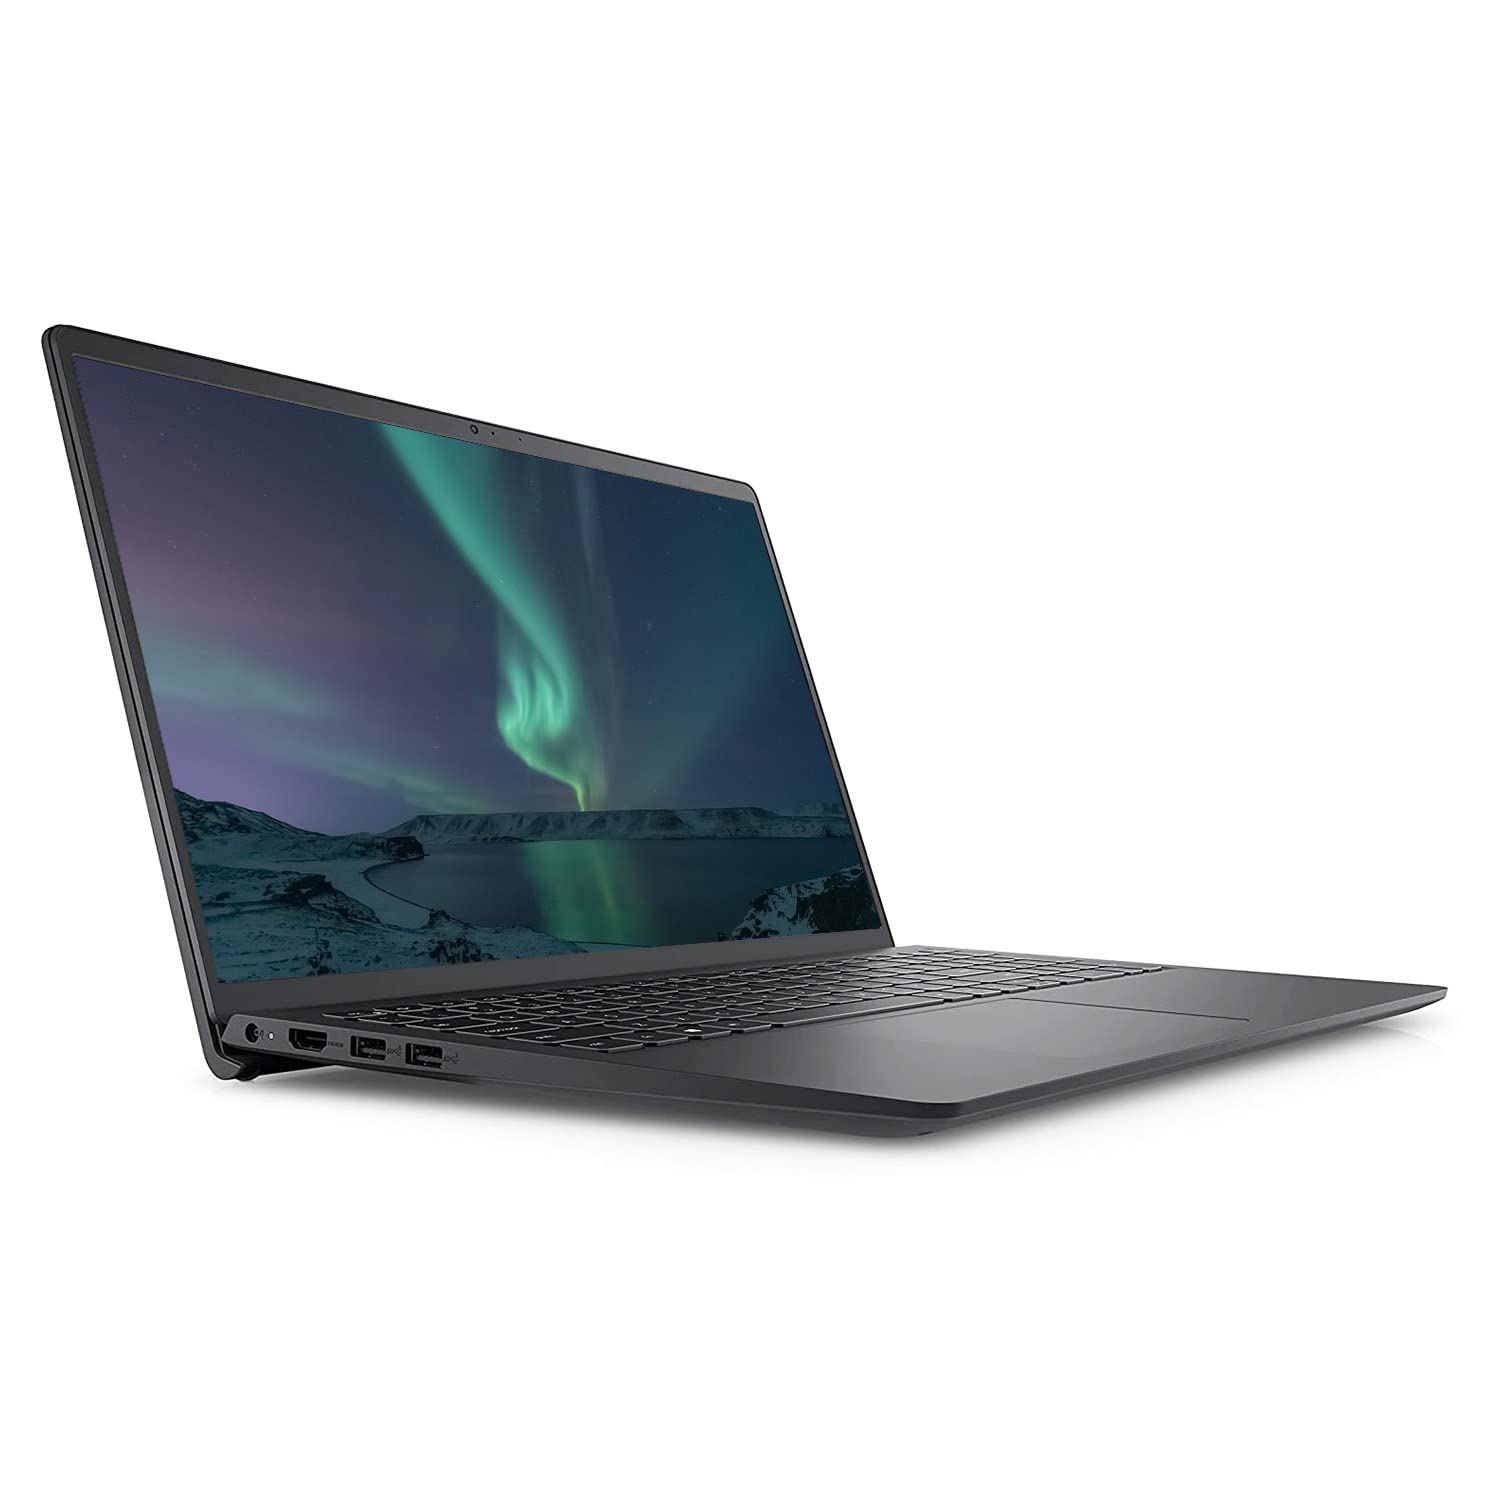 Dell Inspiron 3510 Laptop, 15.6